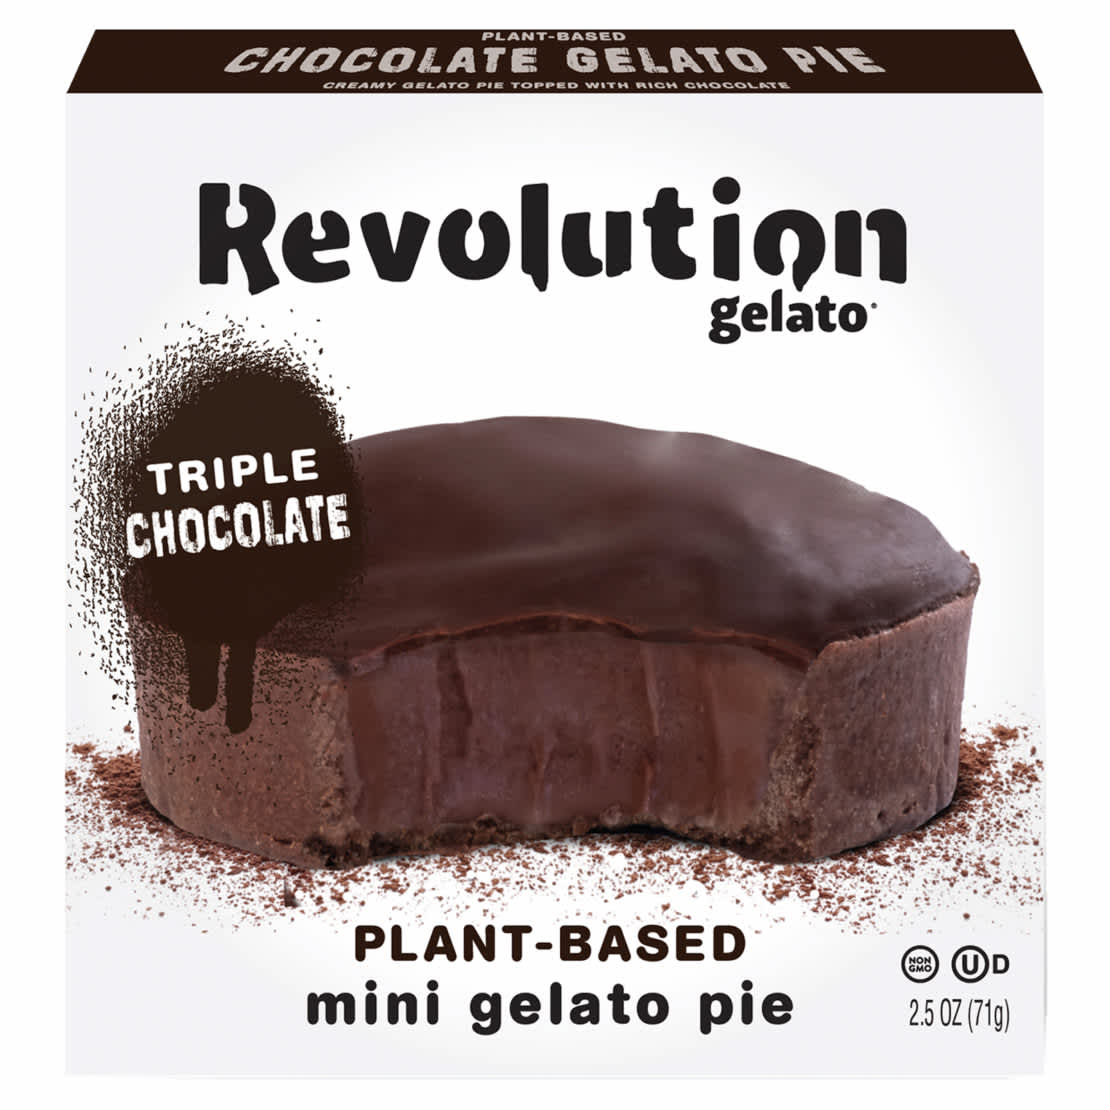 Revolution gelato triple chocolate